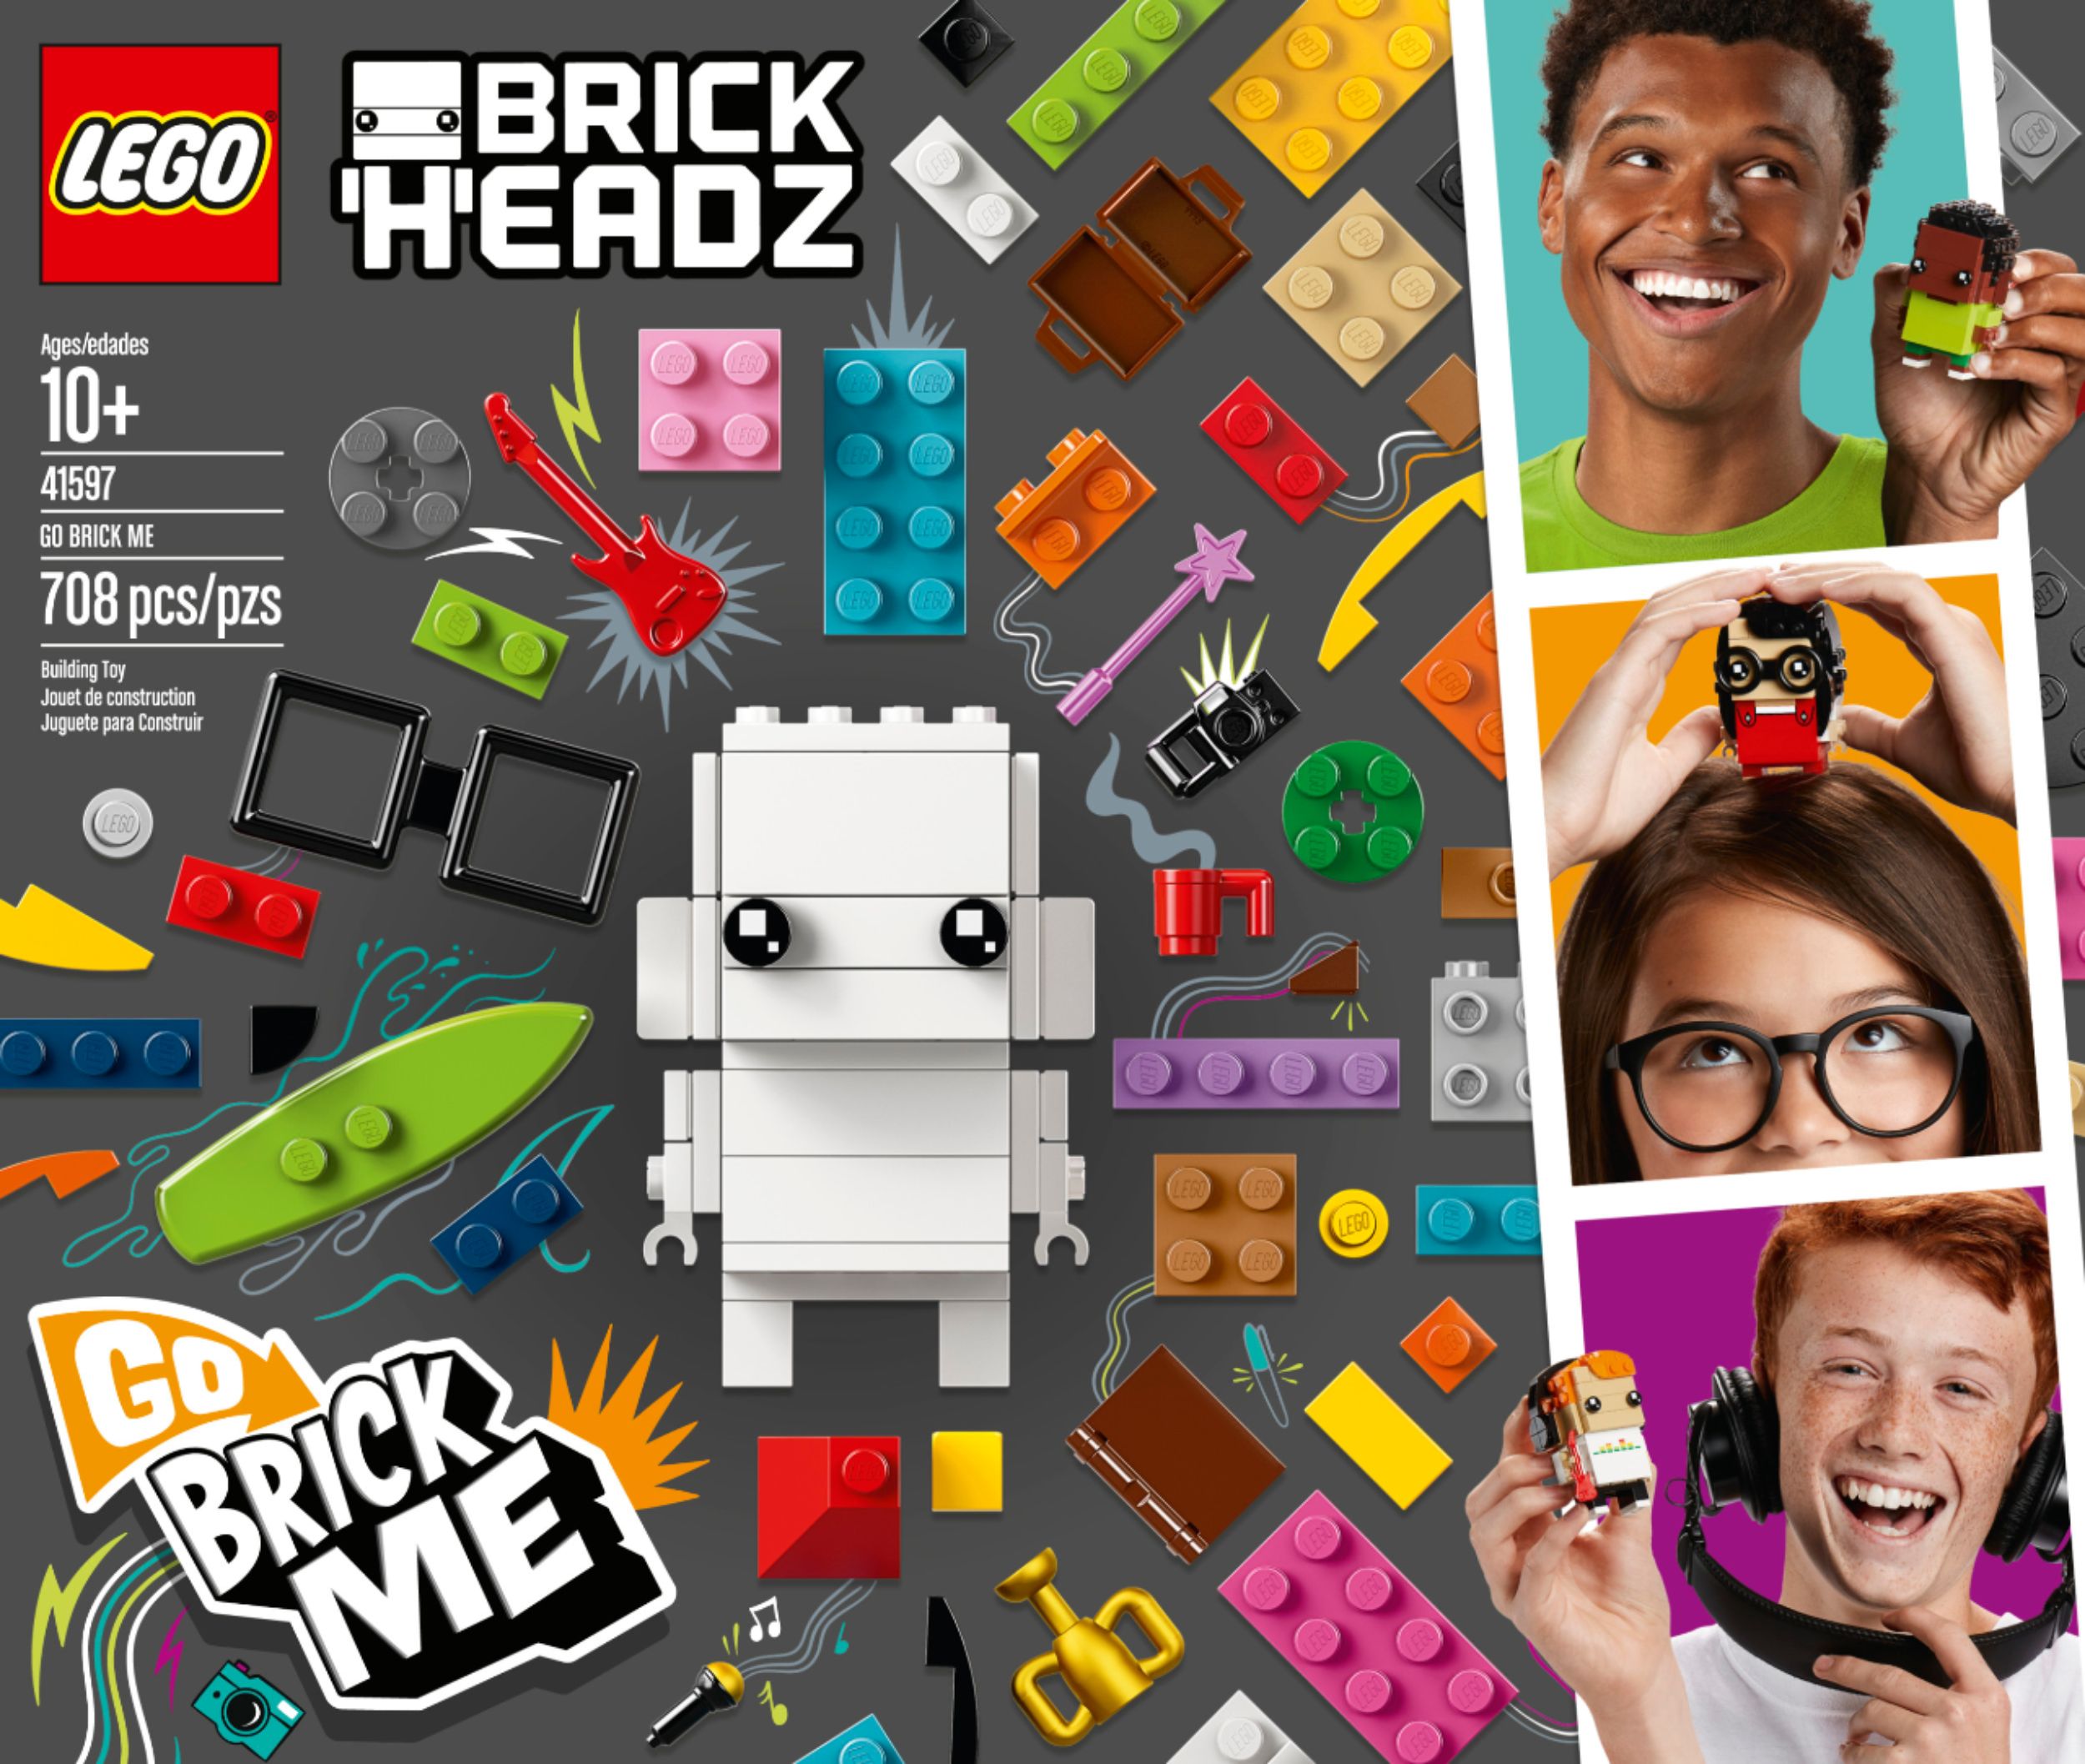 Best Buy: LEGO BrickHeadz Go Brick Me Building Set 41597 6208579